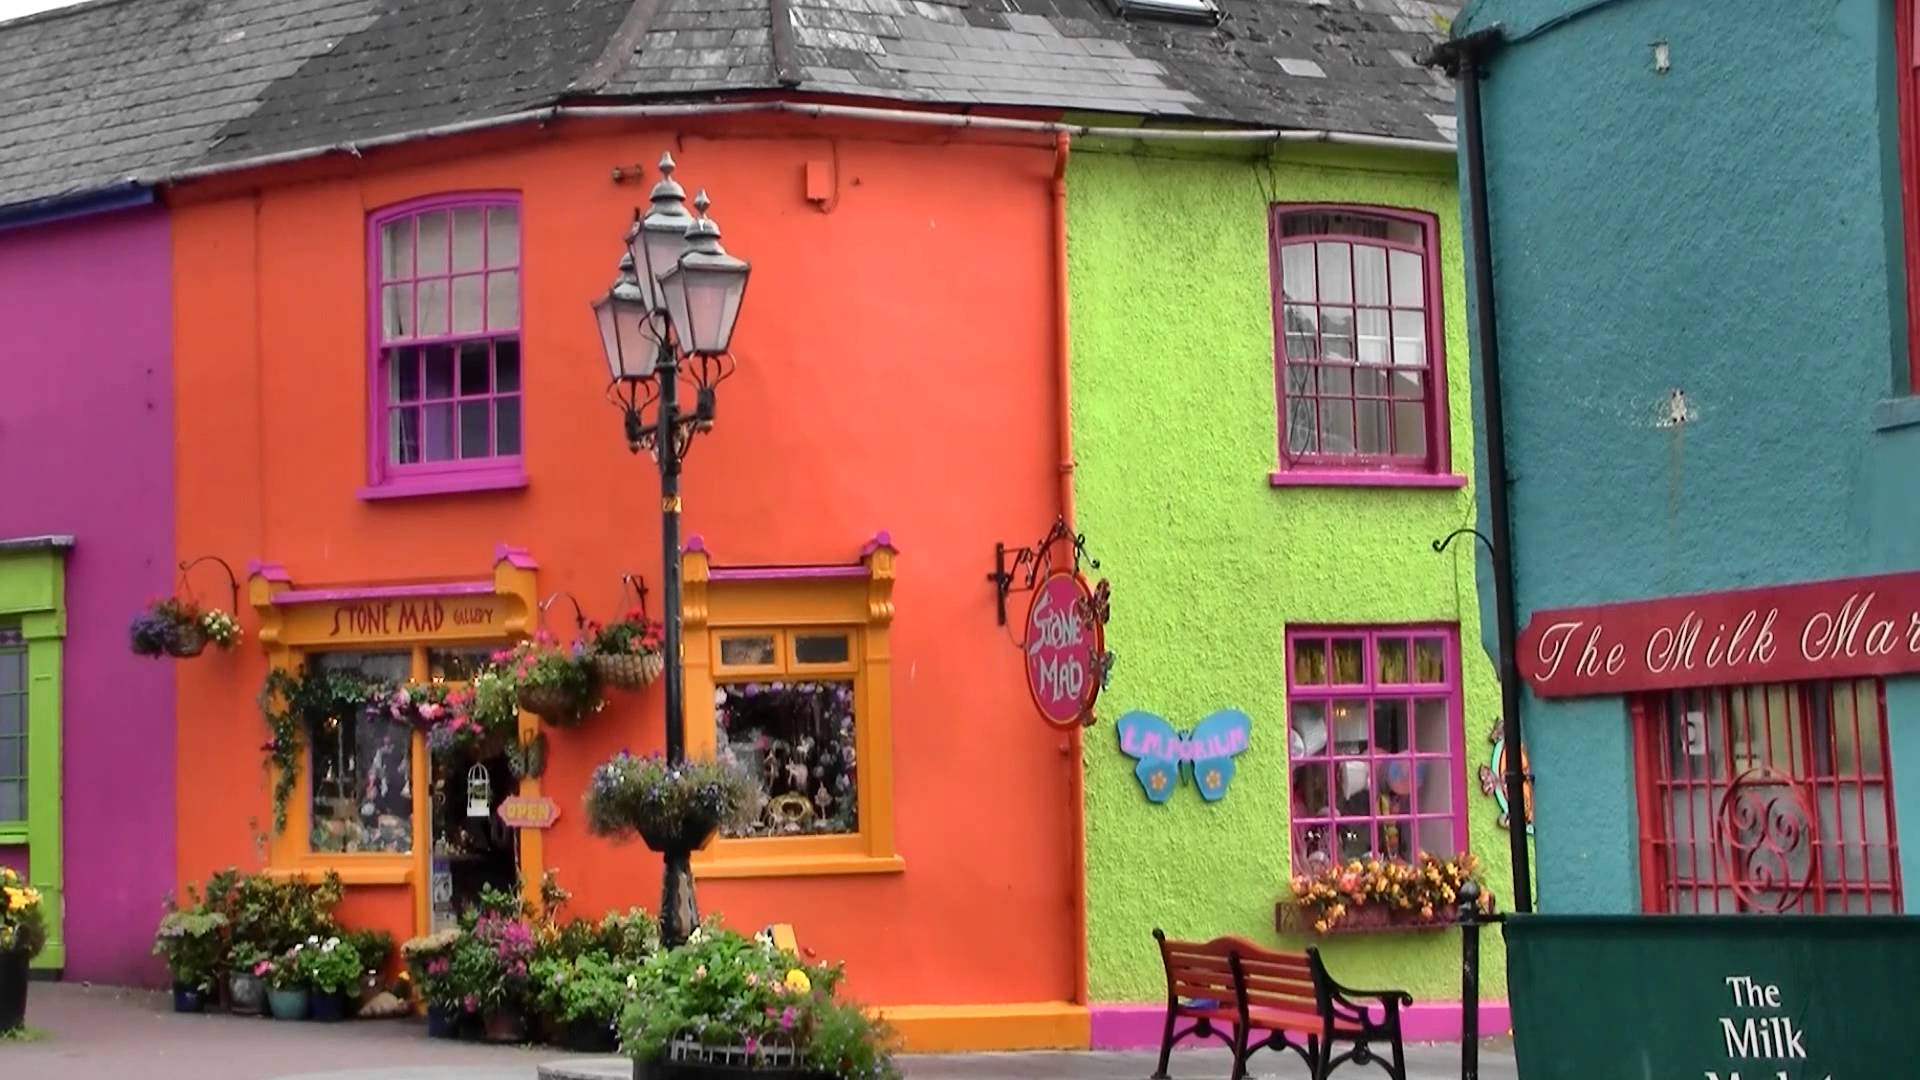 Colorful buildings in Kinsale, Ireland - YouTube